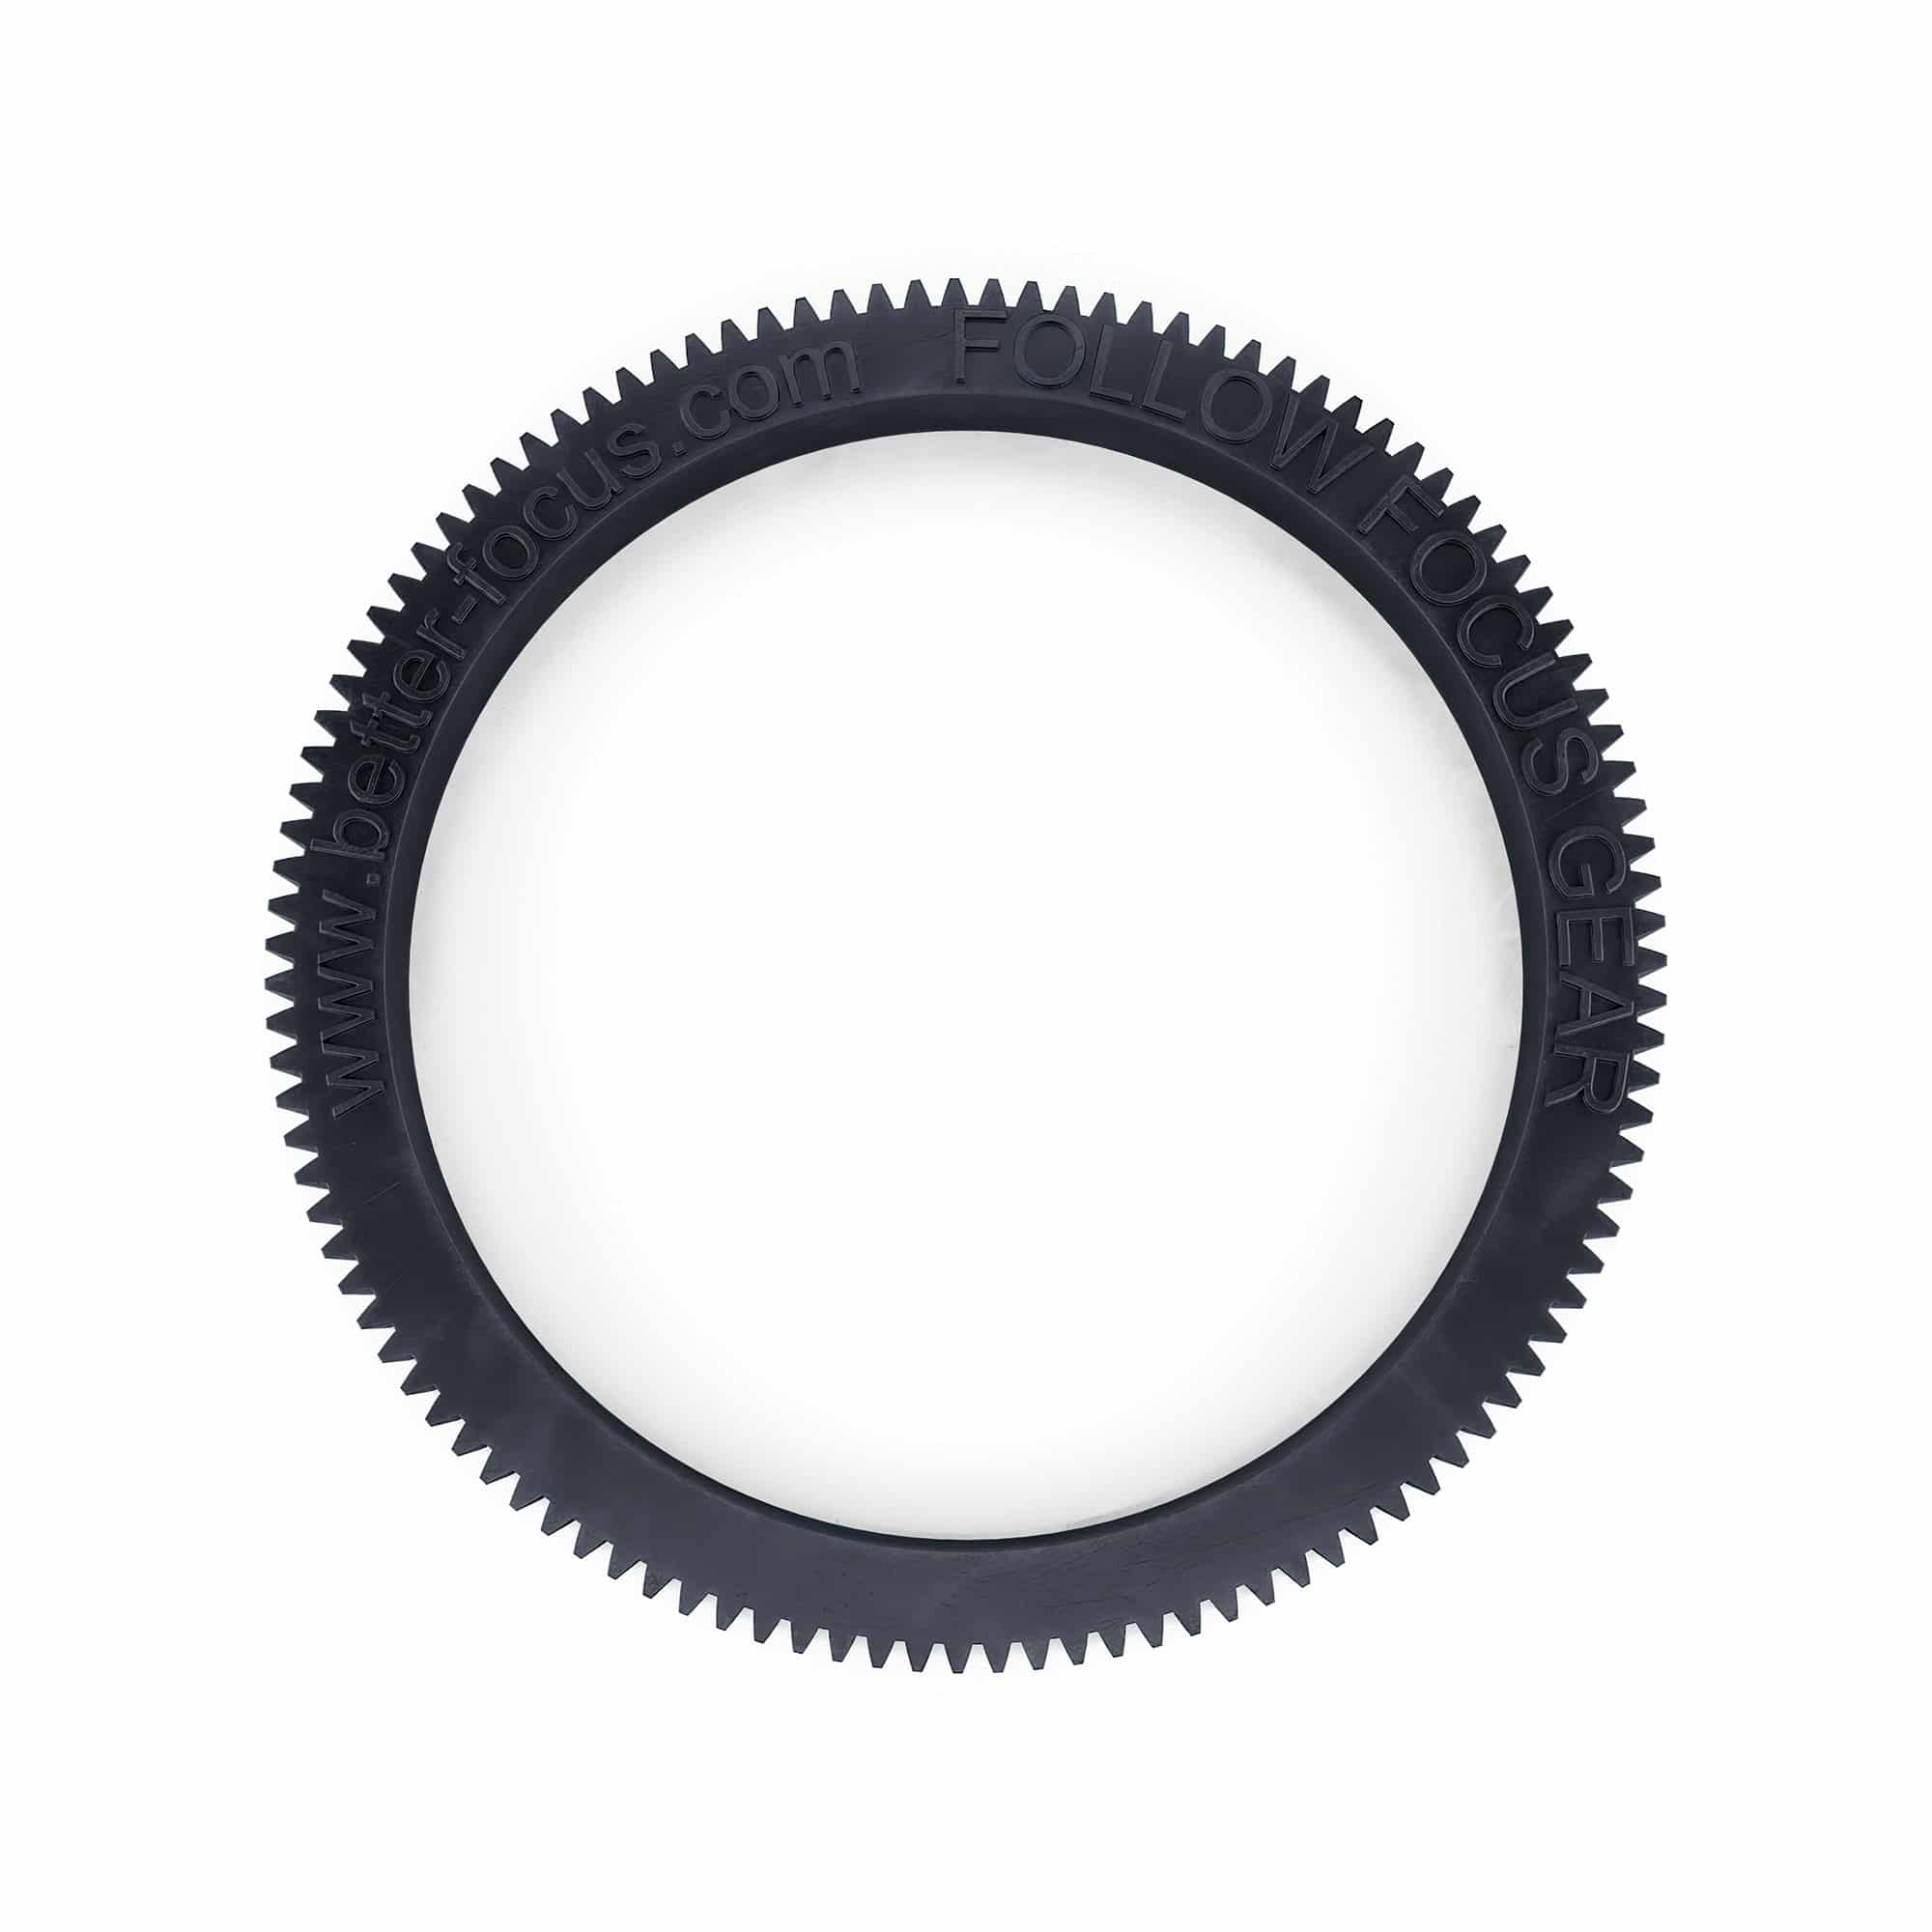 Follow Focus Gear for Sigma 14mm F/1.4 DG DN | A lens